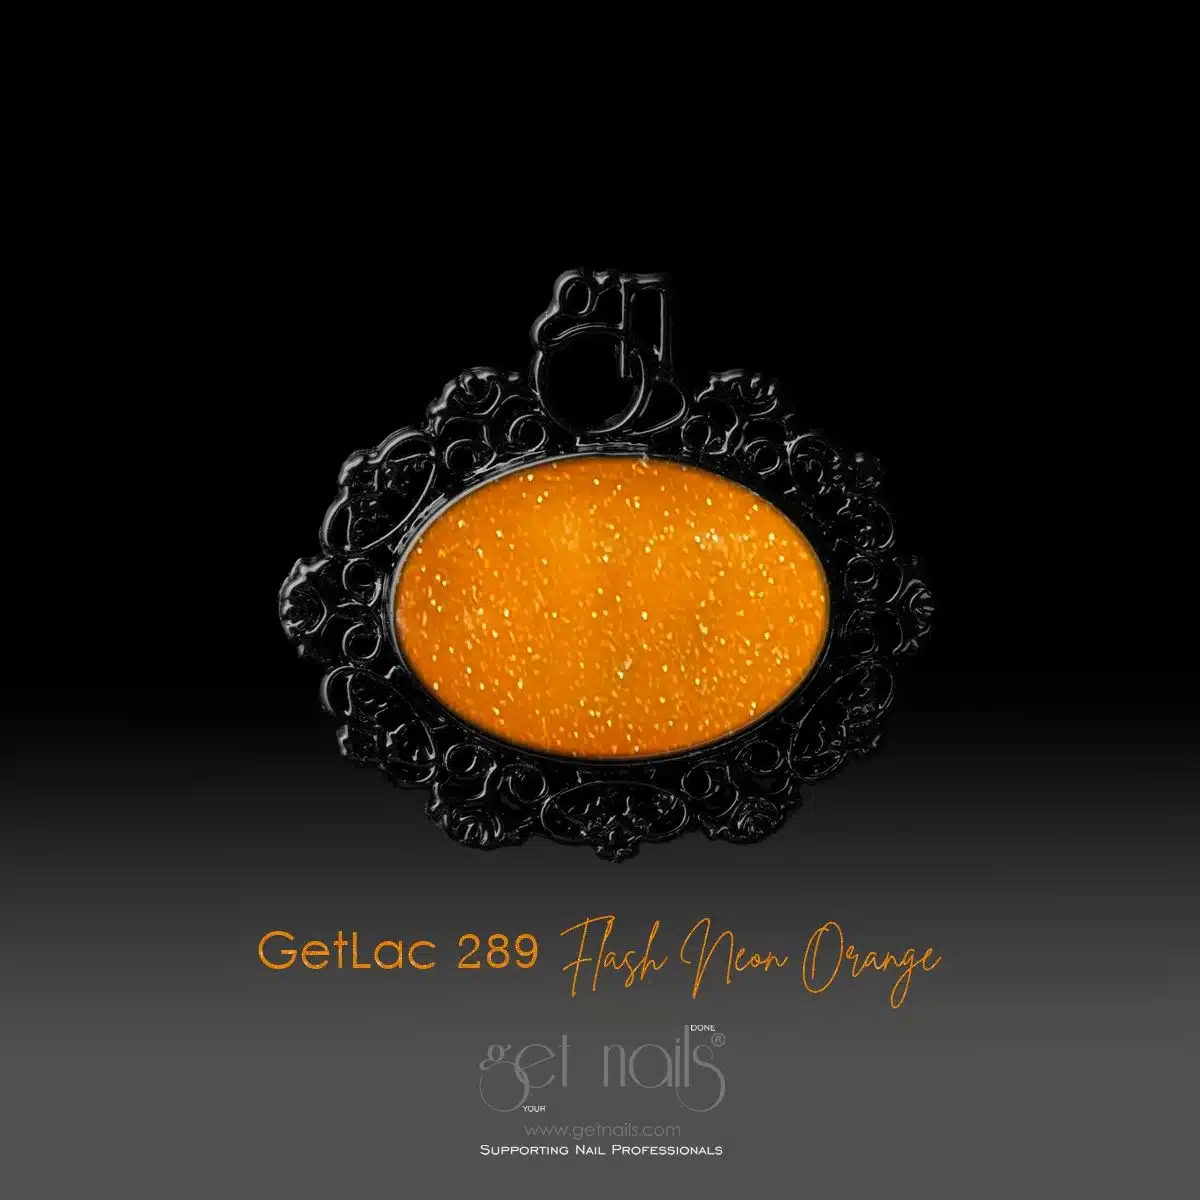 Get Nails Austria - GetLac 289 Flash Neon Arancione 15g